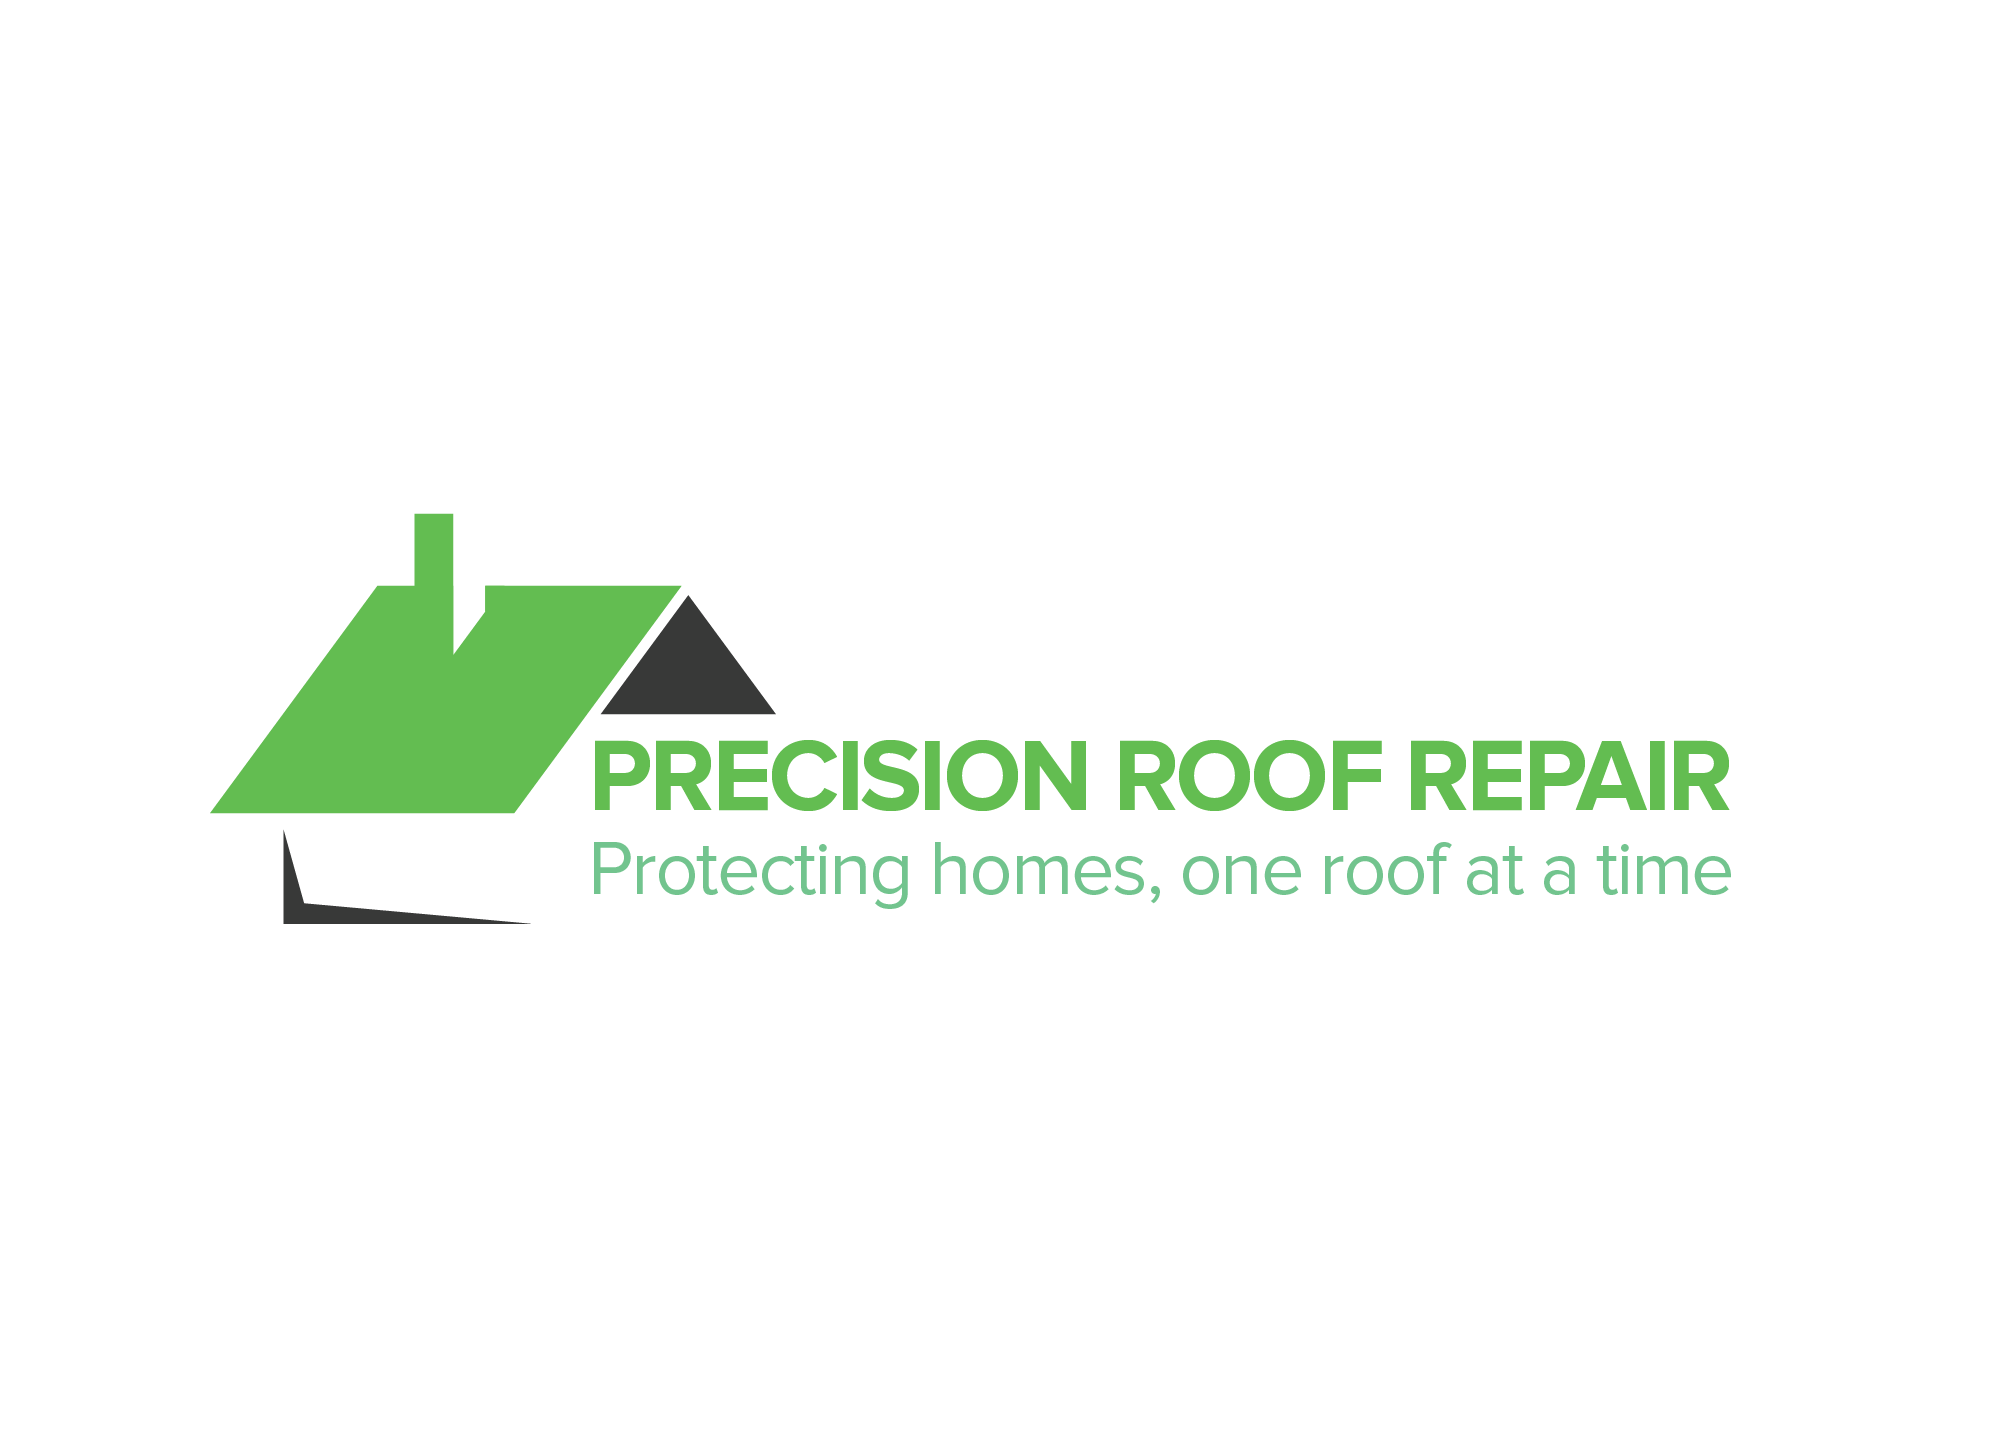 Precision roof repair